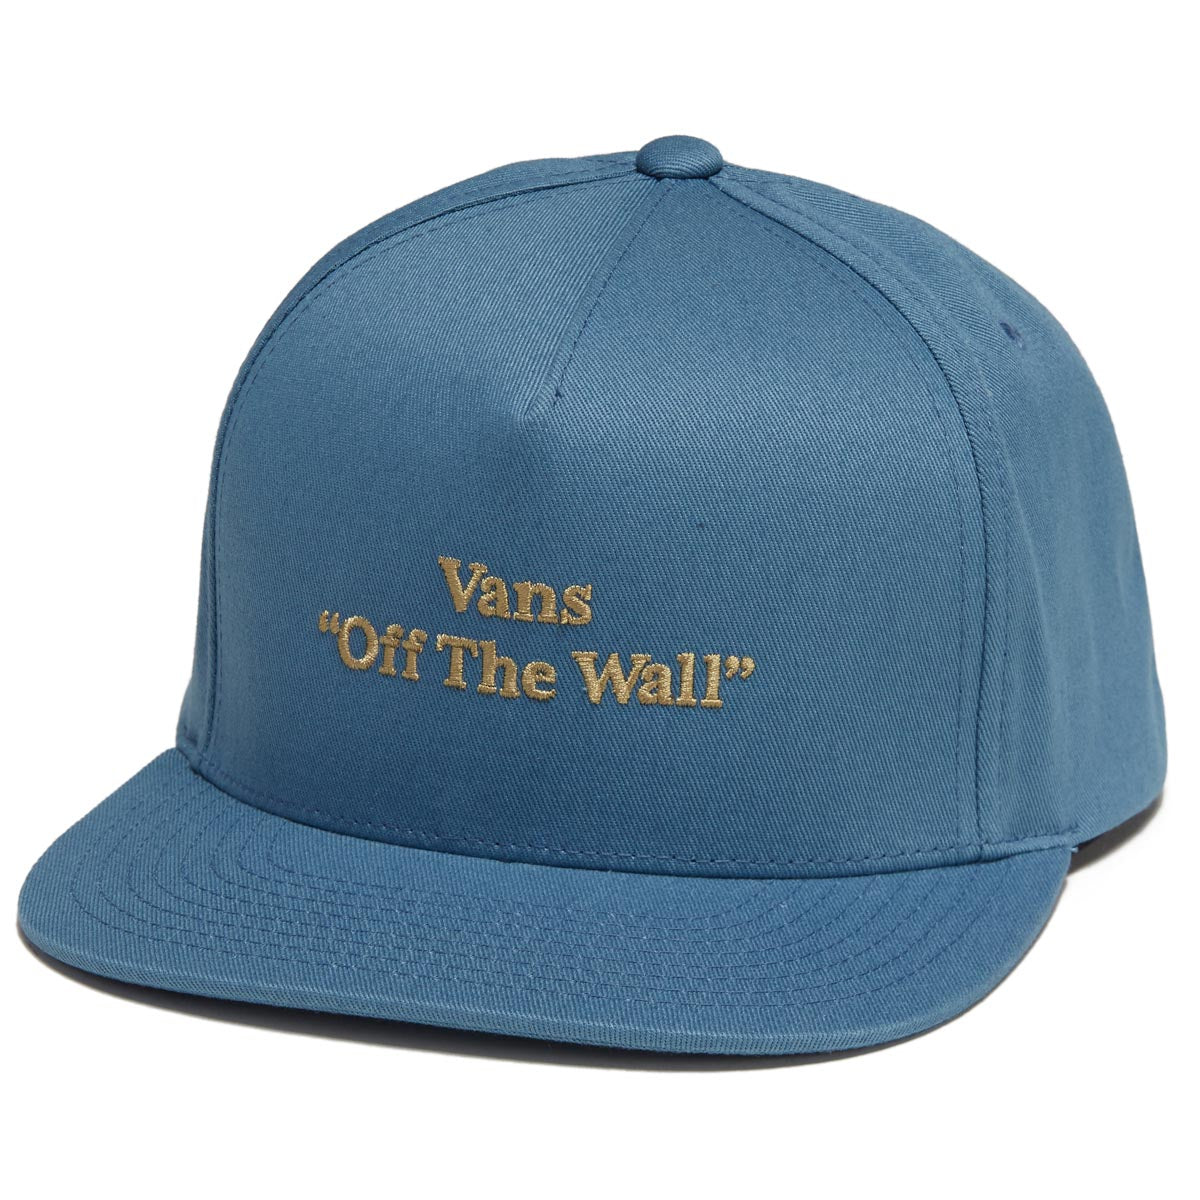 Vans Quoted Snapback Hat - Copen Blue image 1